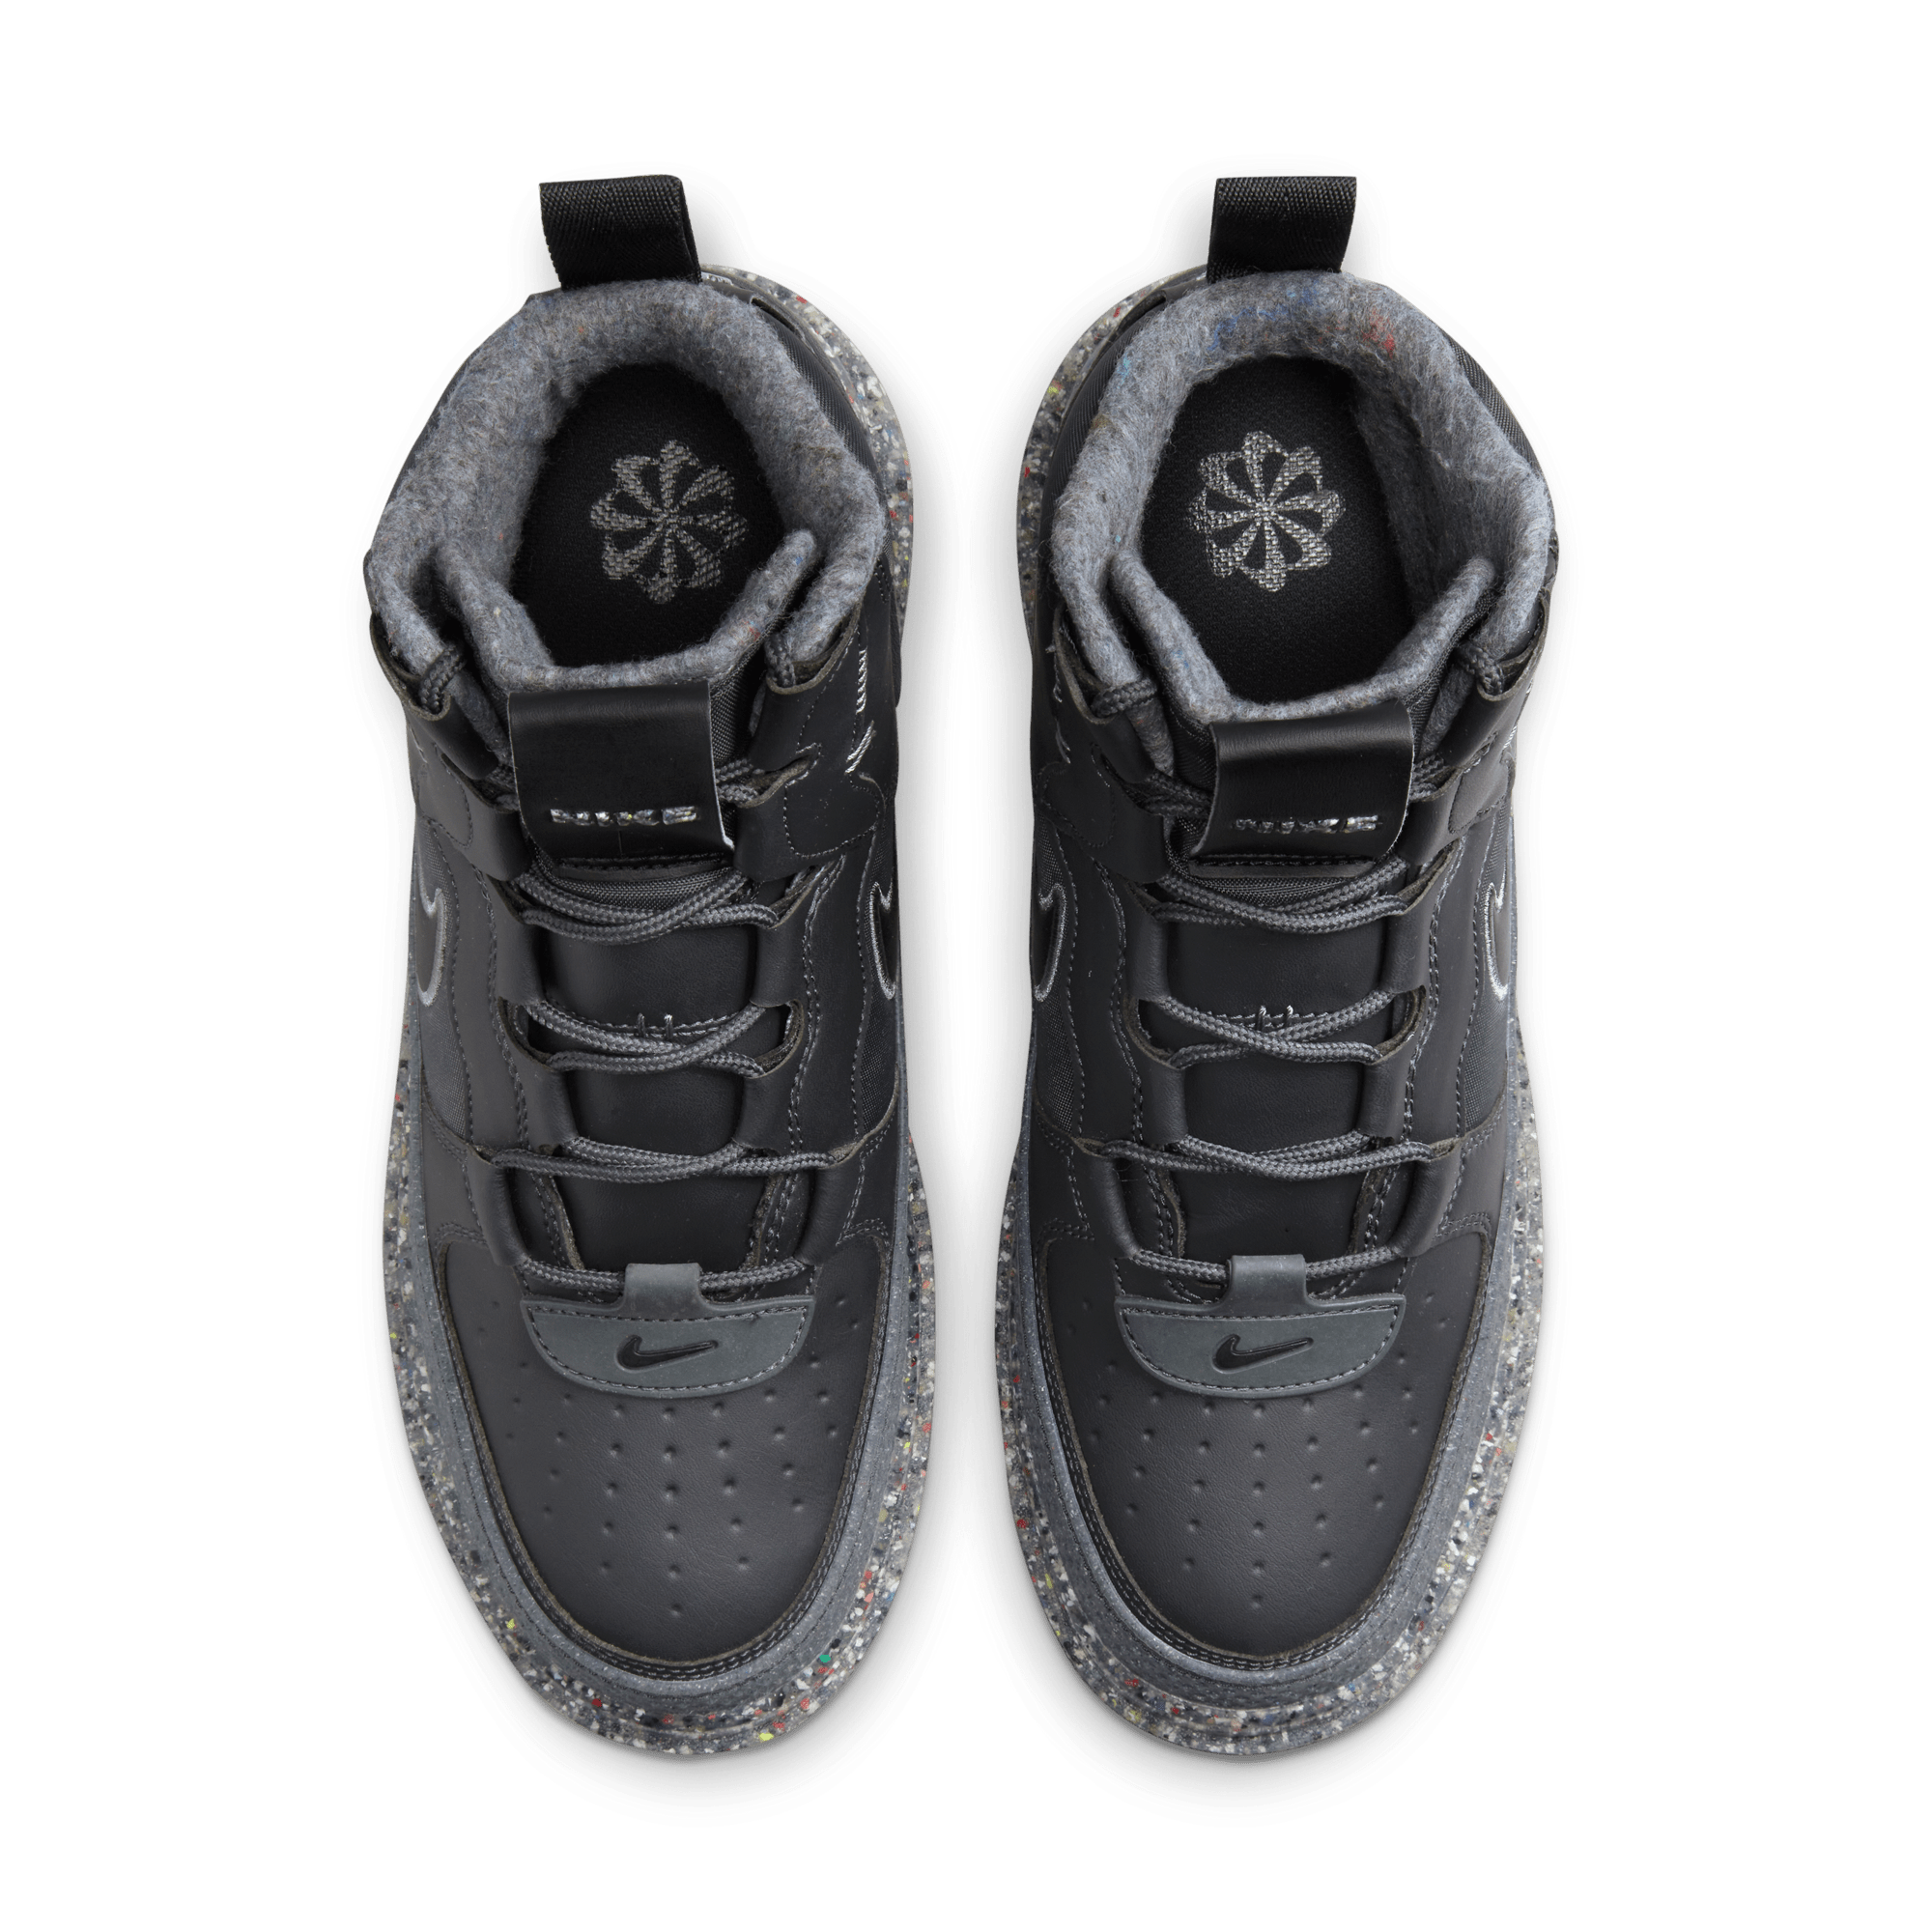 Nike Air Force 1 Low Black Green Glow Size 10.5